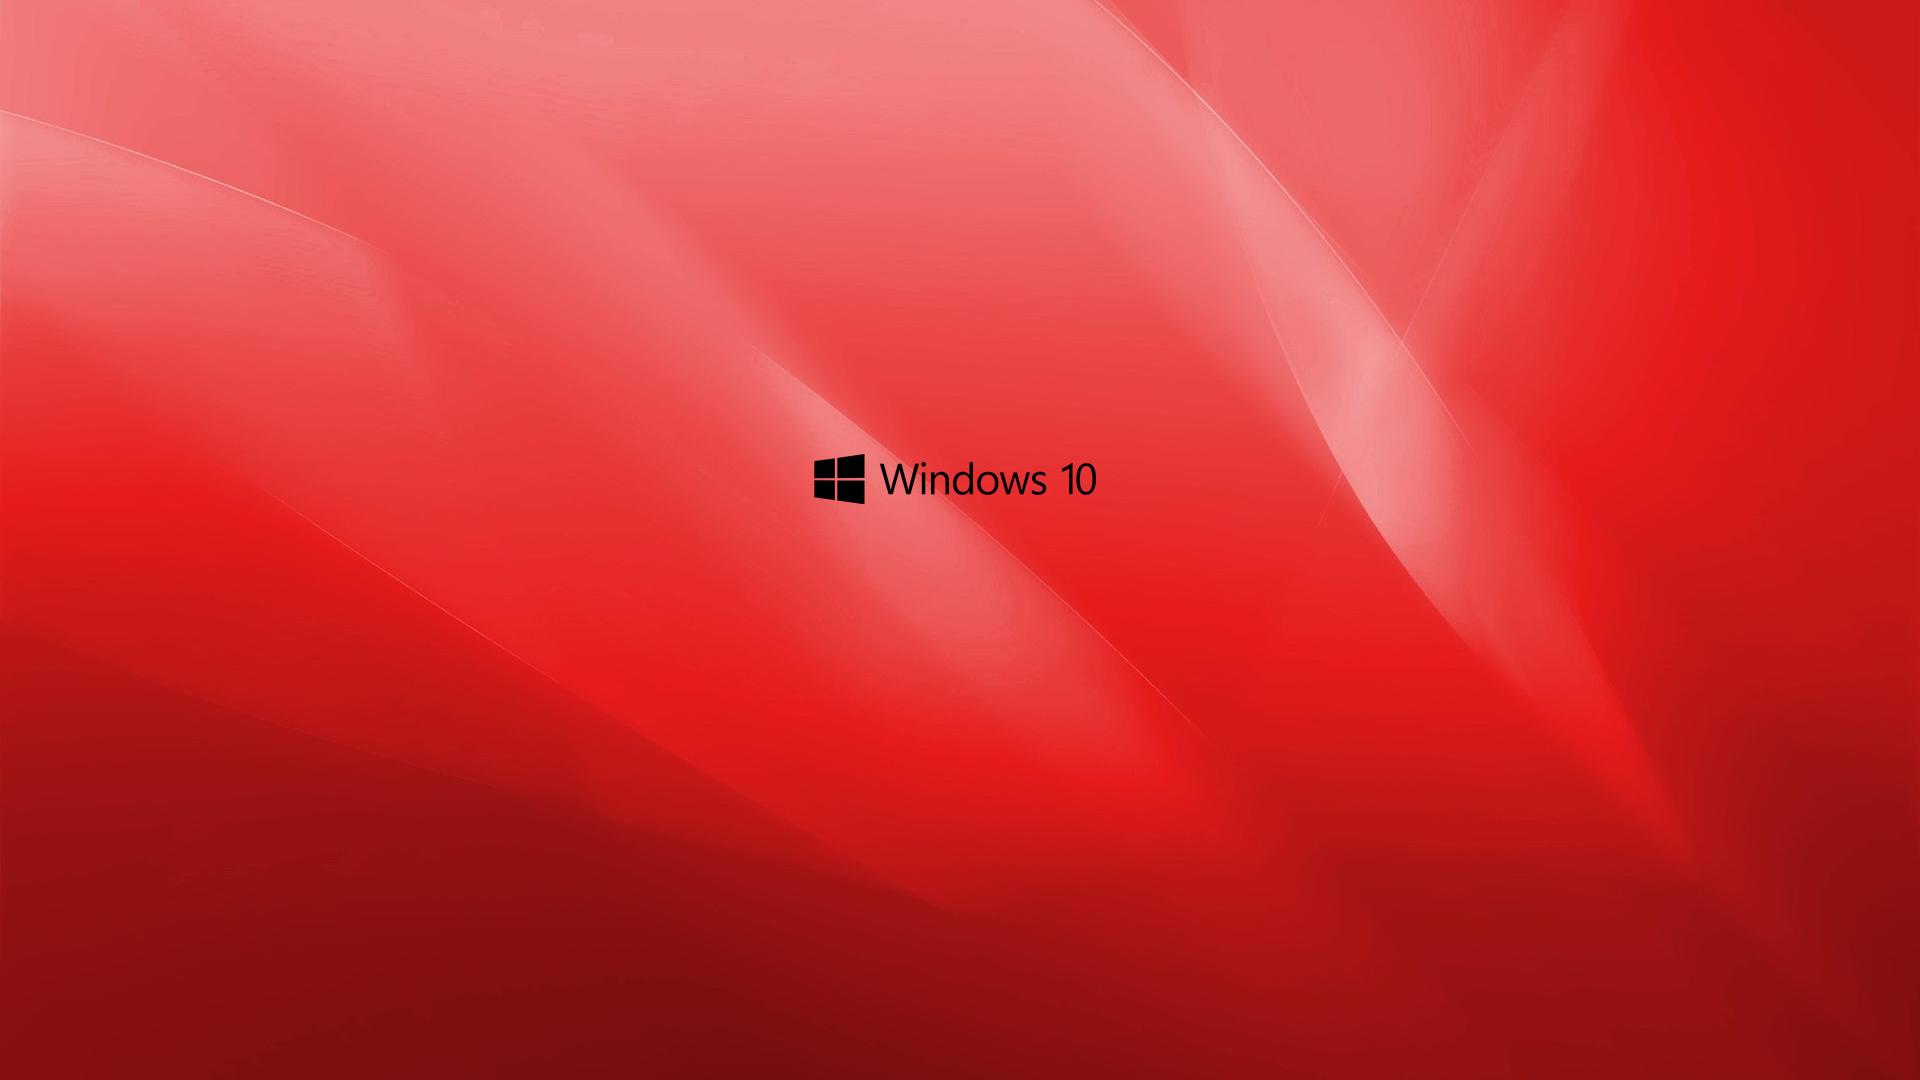 Windows 10 Wallpaper Red with Black Logo Wallpaper